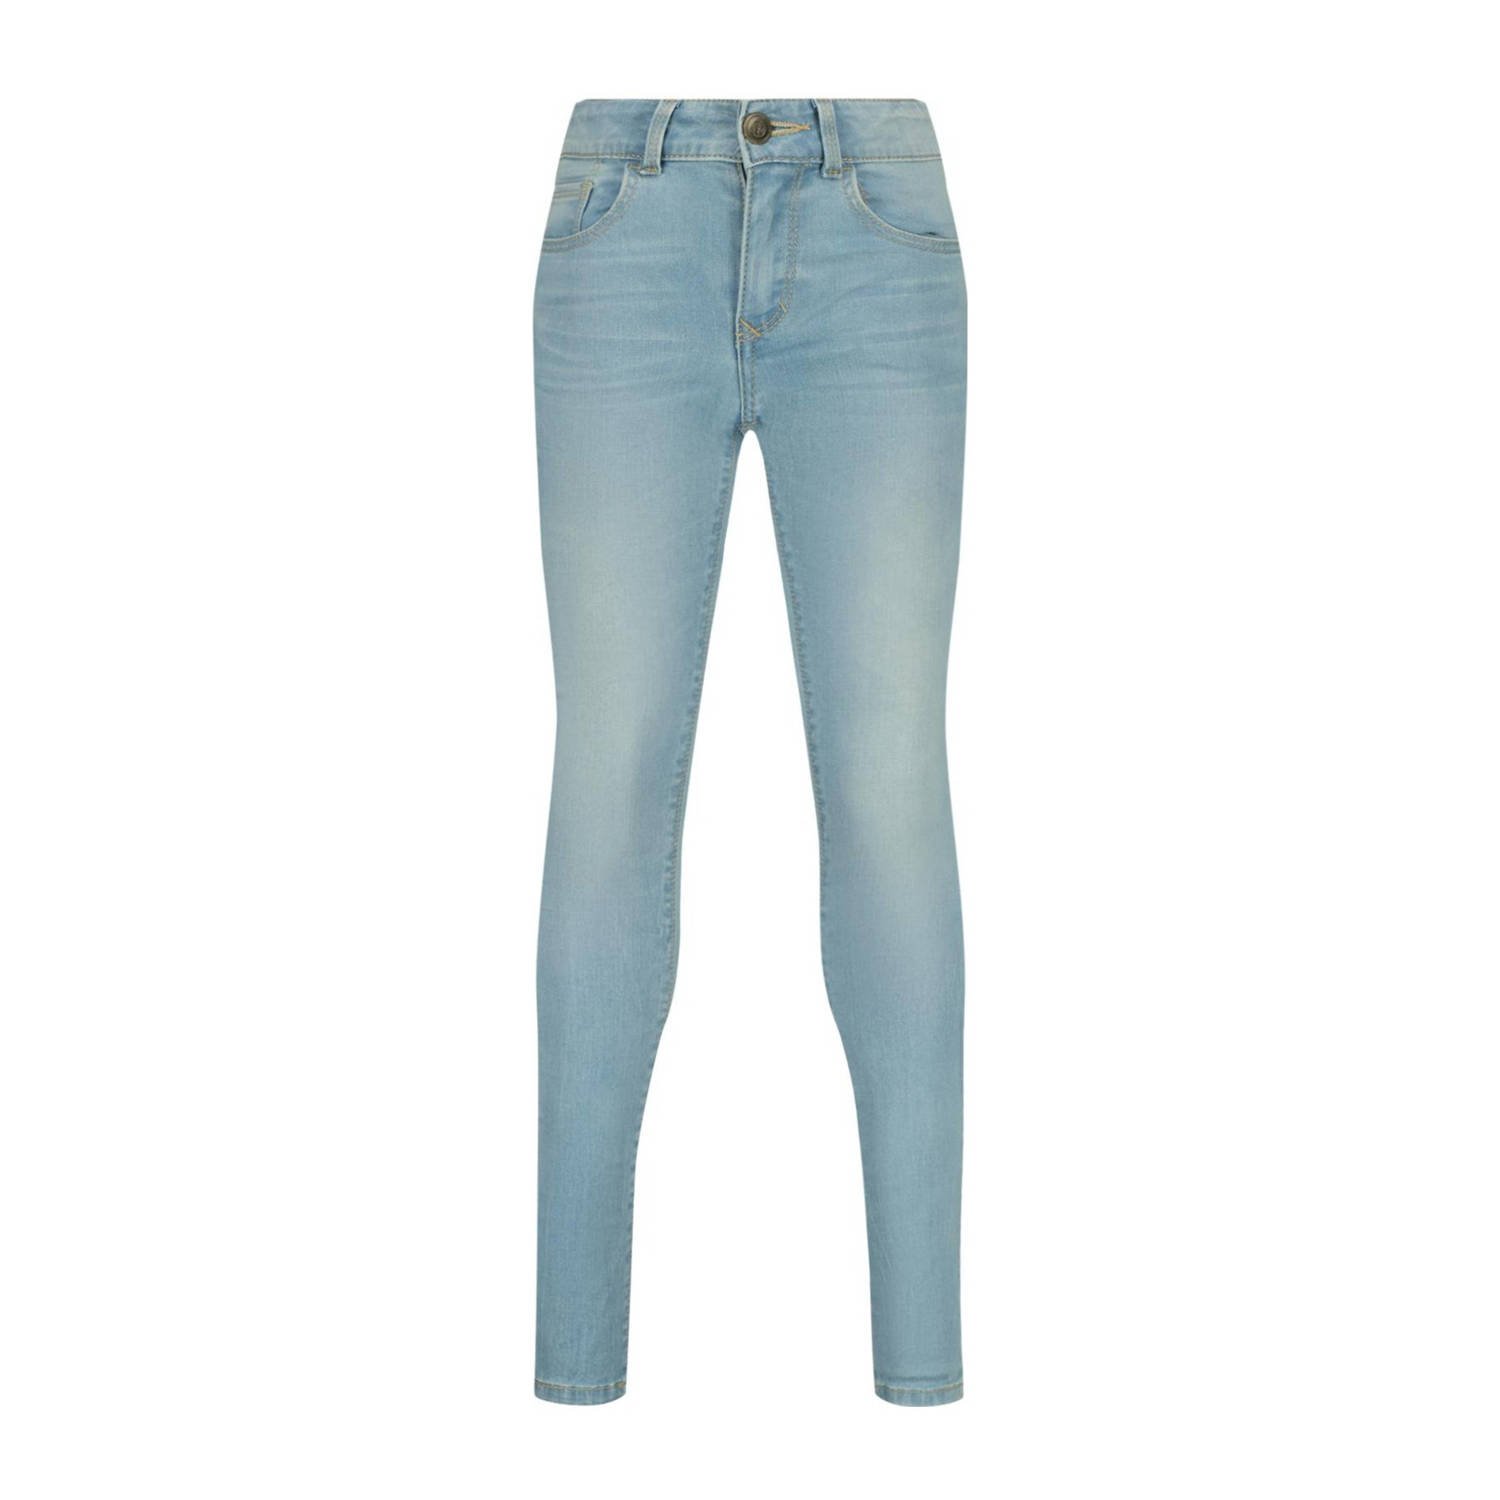 Raizzed skinny jeans Chelsea light blue stone Blauw Meisjes Stretchdenim 134